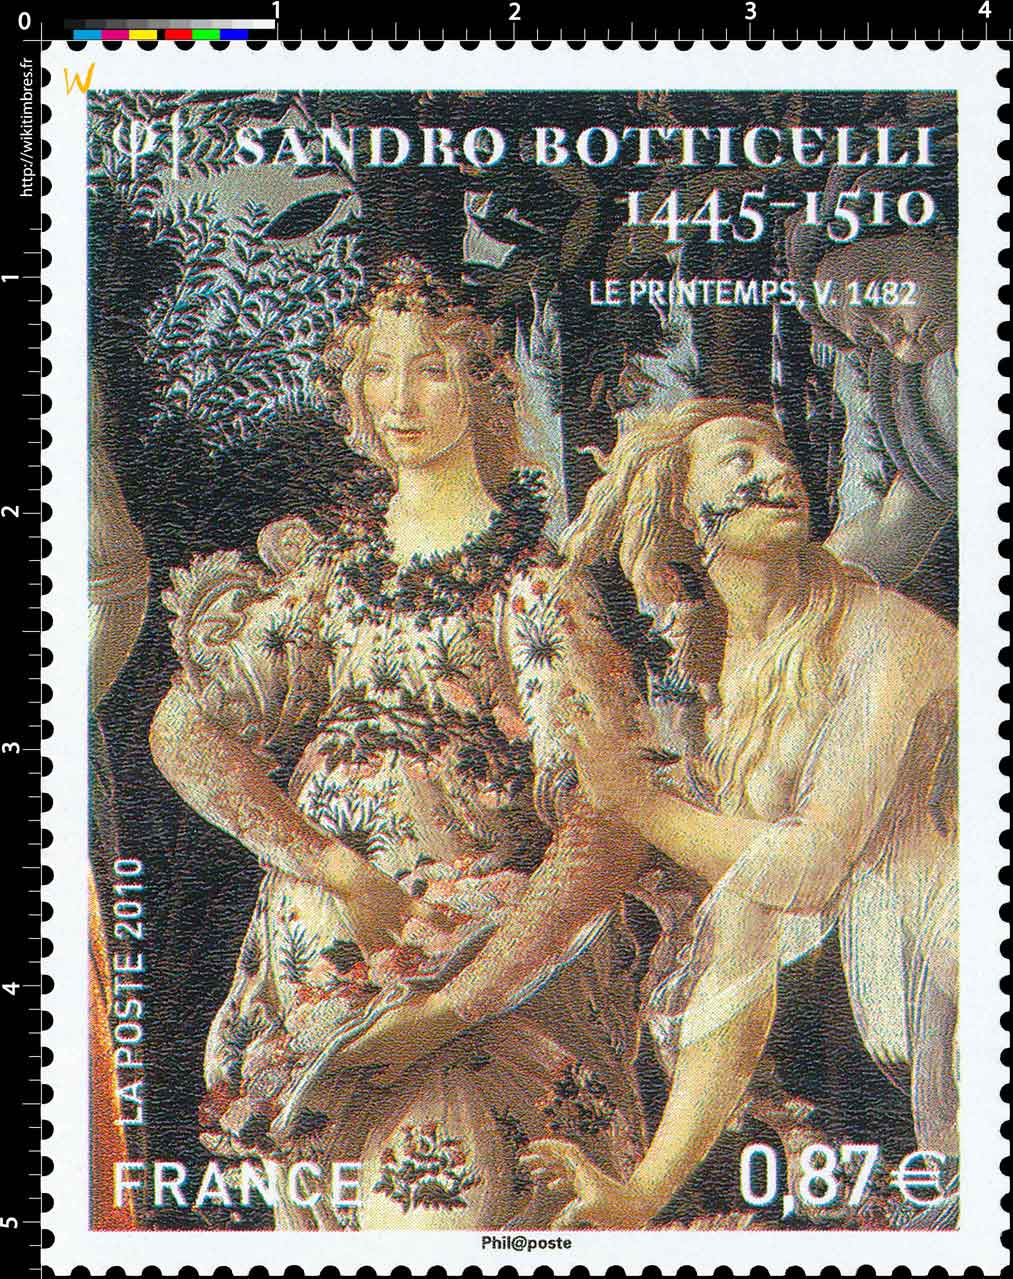 2010 Sandro Botticelli 1445 – 1510. Le Printemps, v. 1482